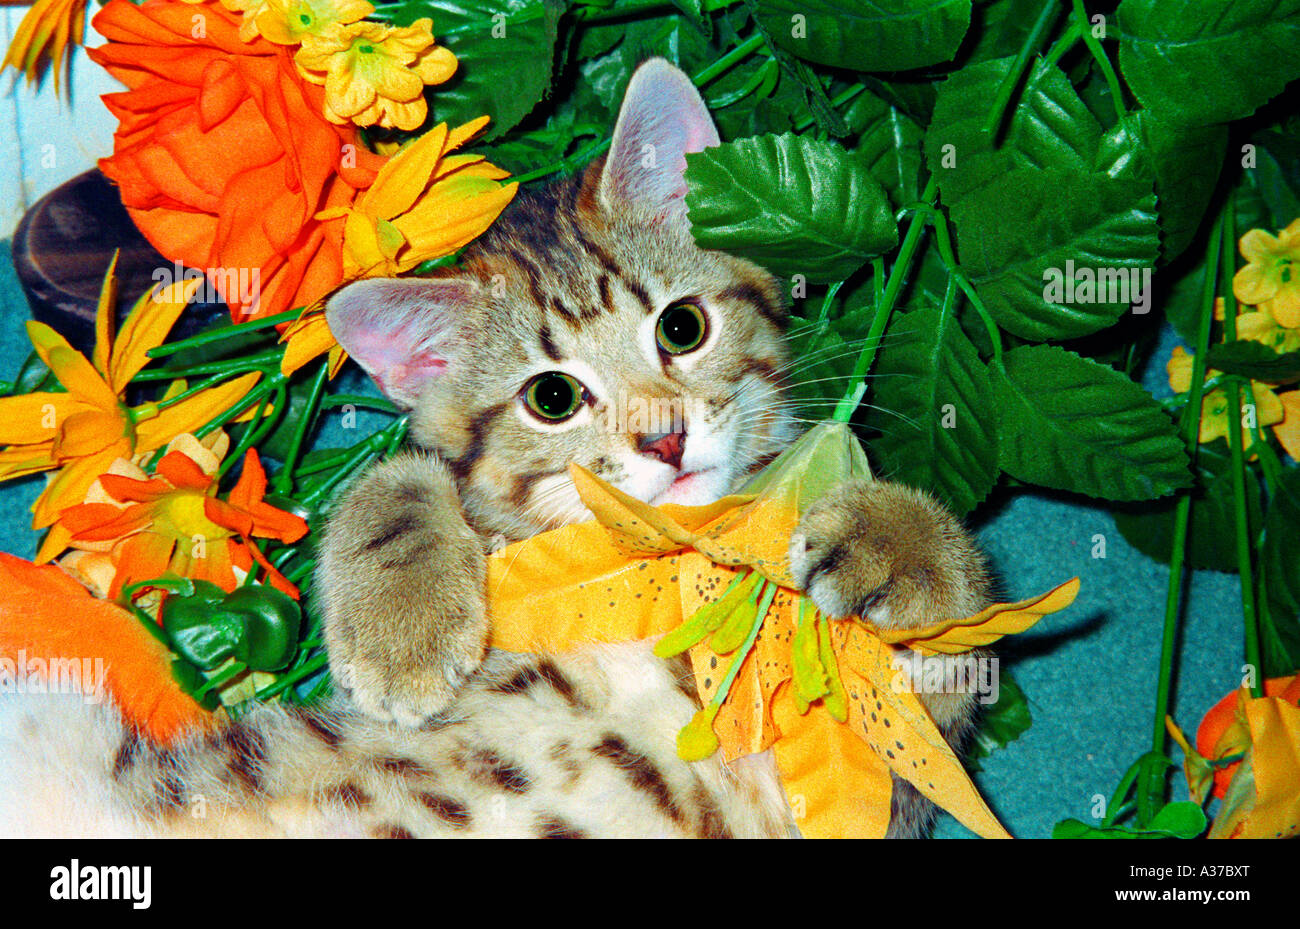 Cat lying amidst flowers Stock Photo